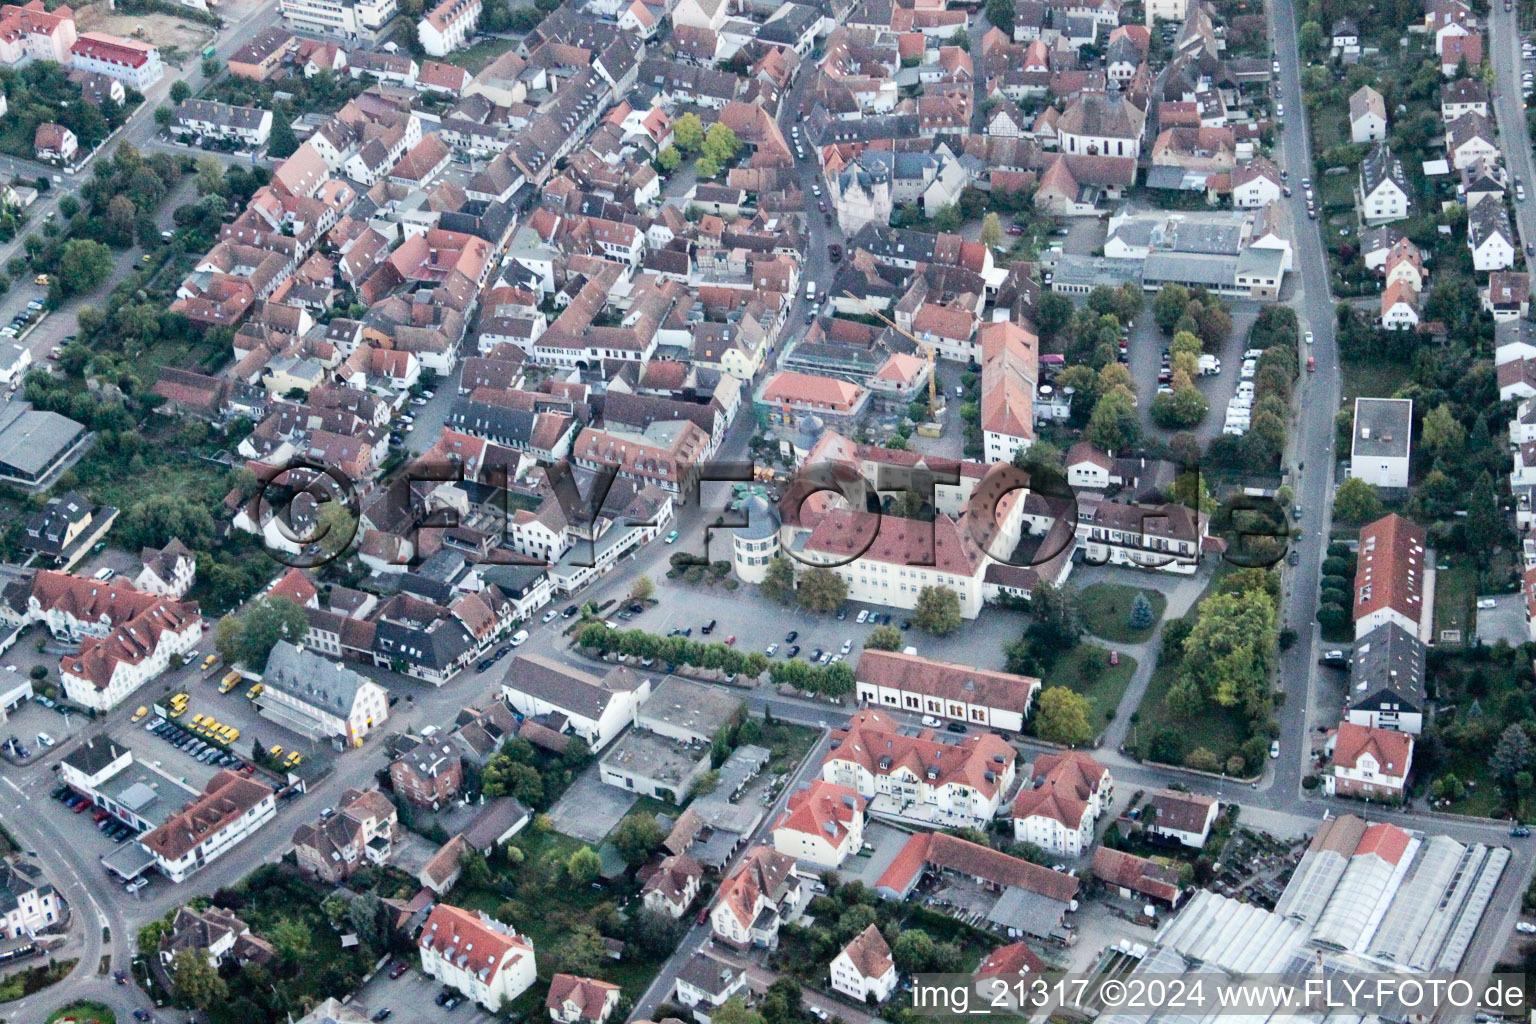 Drone image of Bad Bergzabern in the state Rhineland-Palatinate, Germany